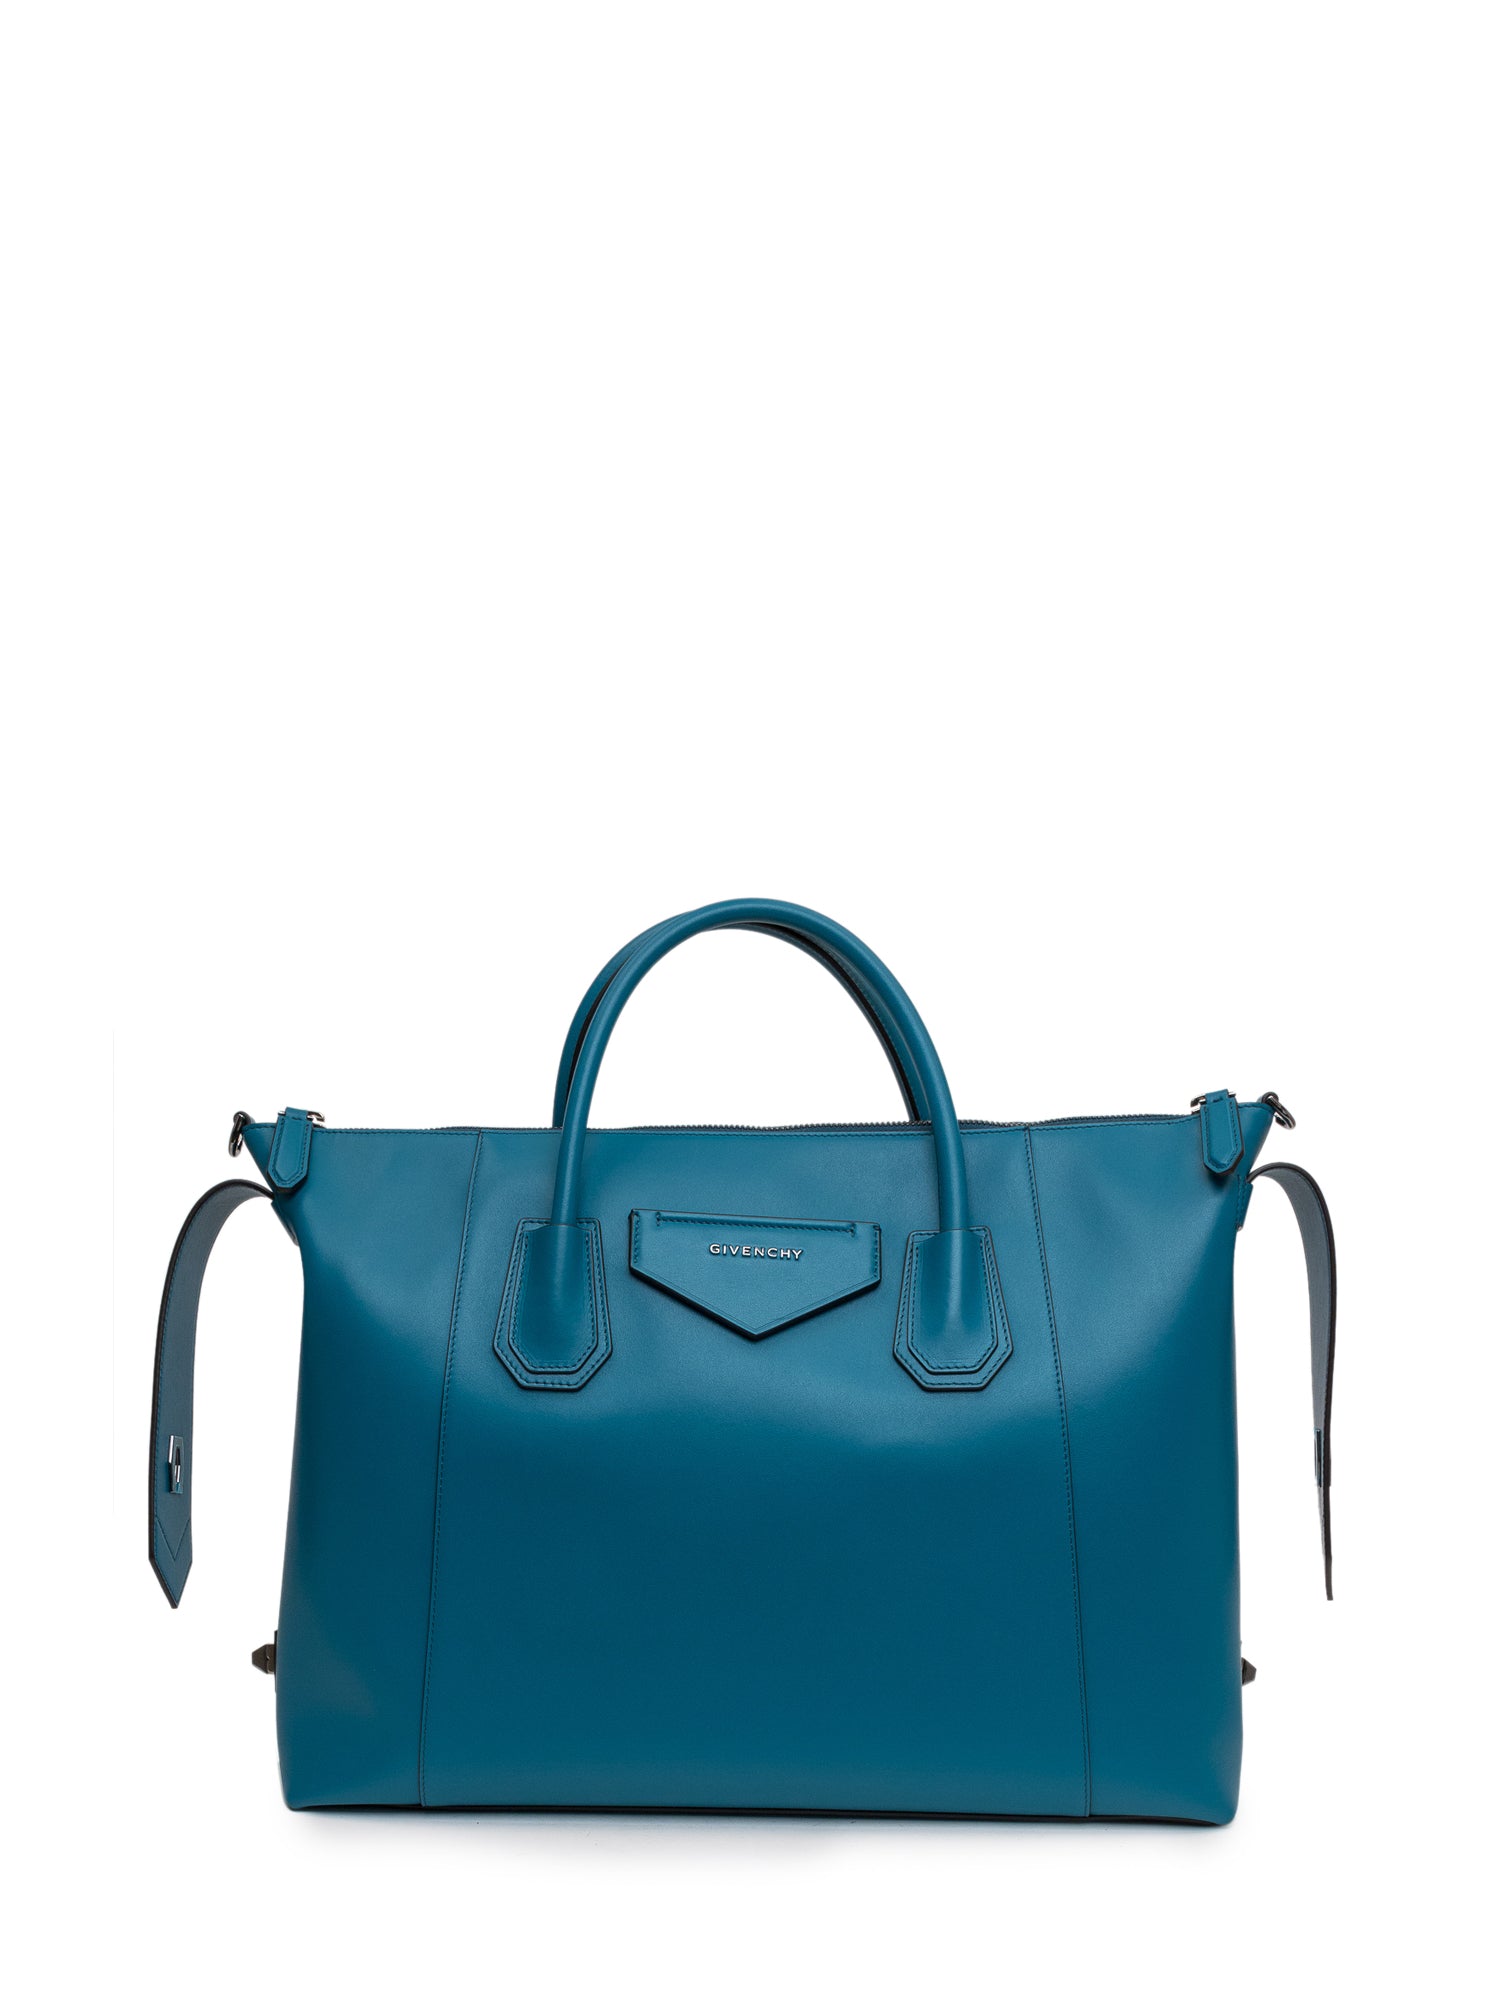 Givenchy Antigona Soft Medium Tote Bag In Blue